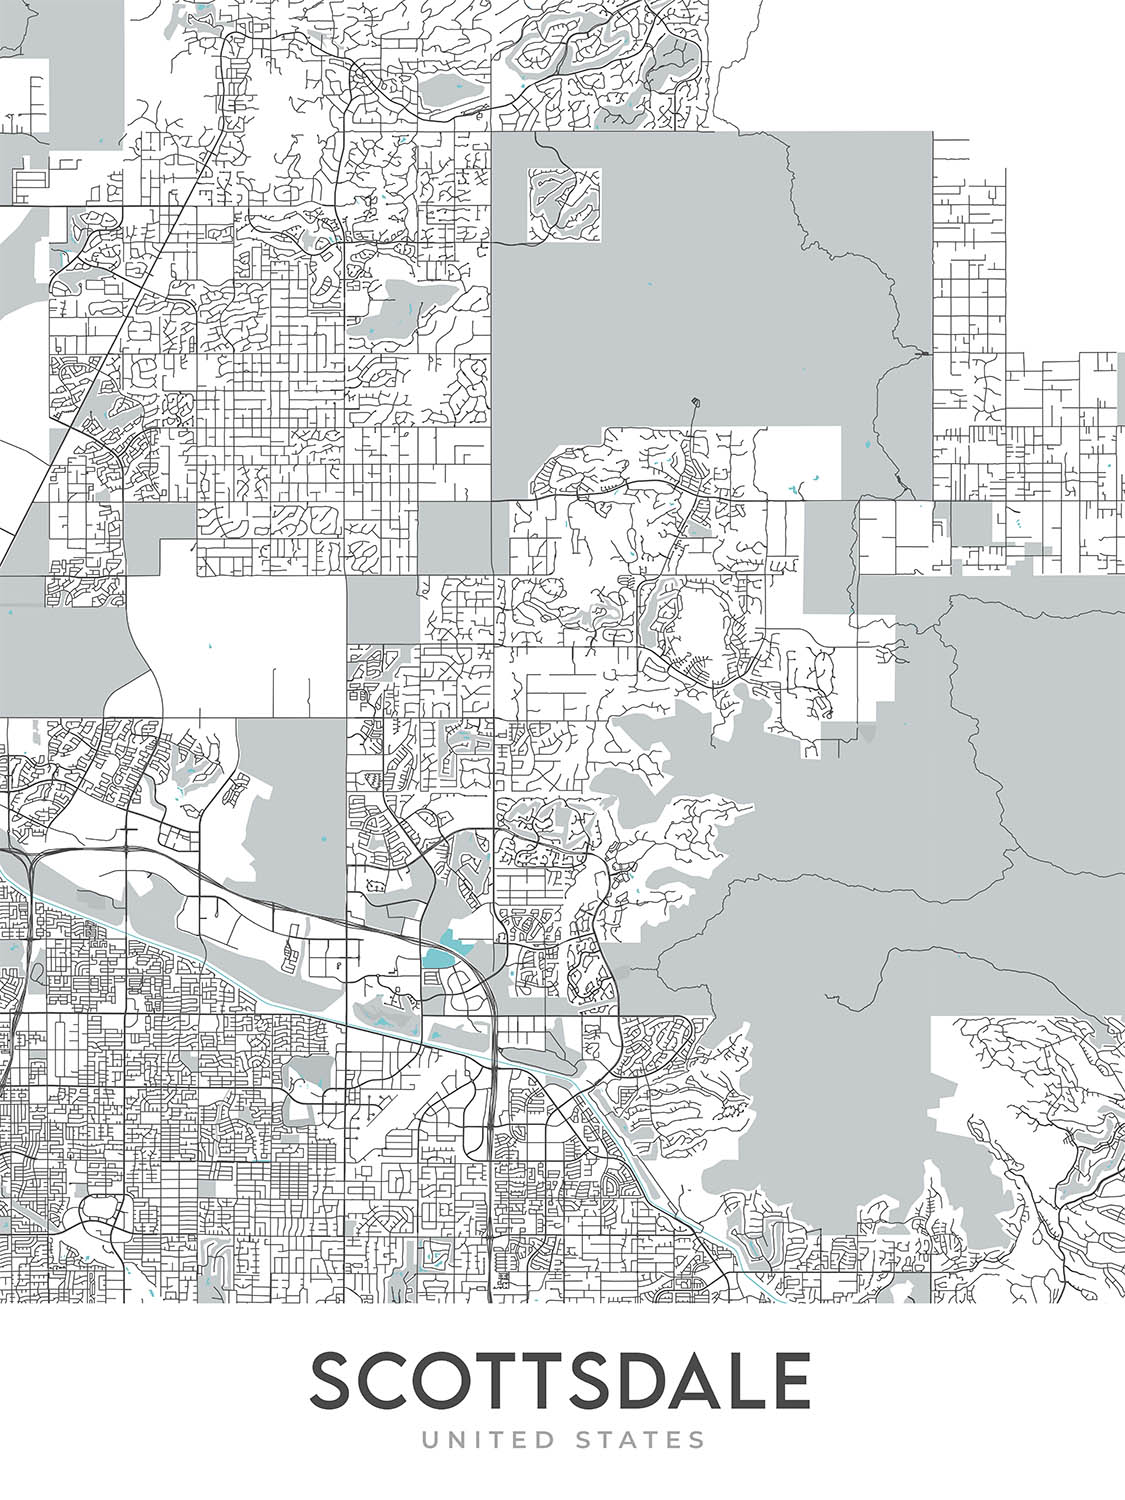 Modern City Map of Scottsdale, AZ: Downtown, Old Town, Scottsdale Stadium, Scottsdale Fashion Square, Loop 101